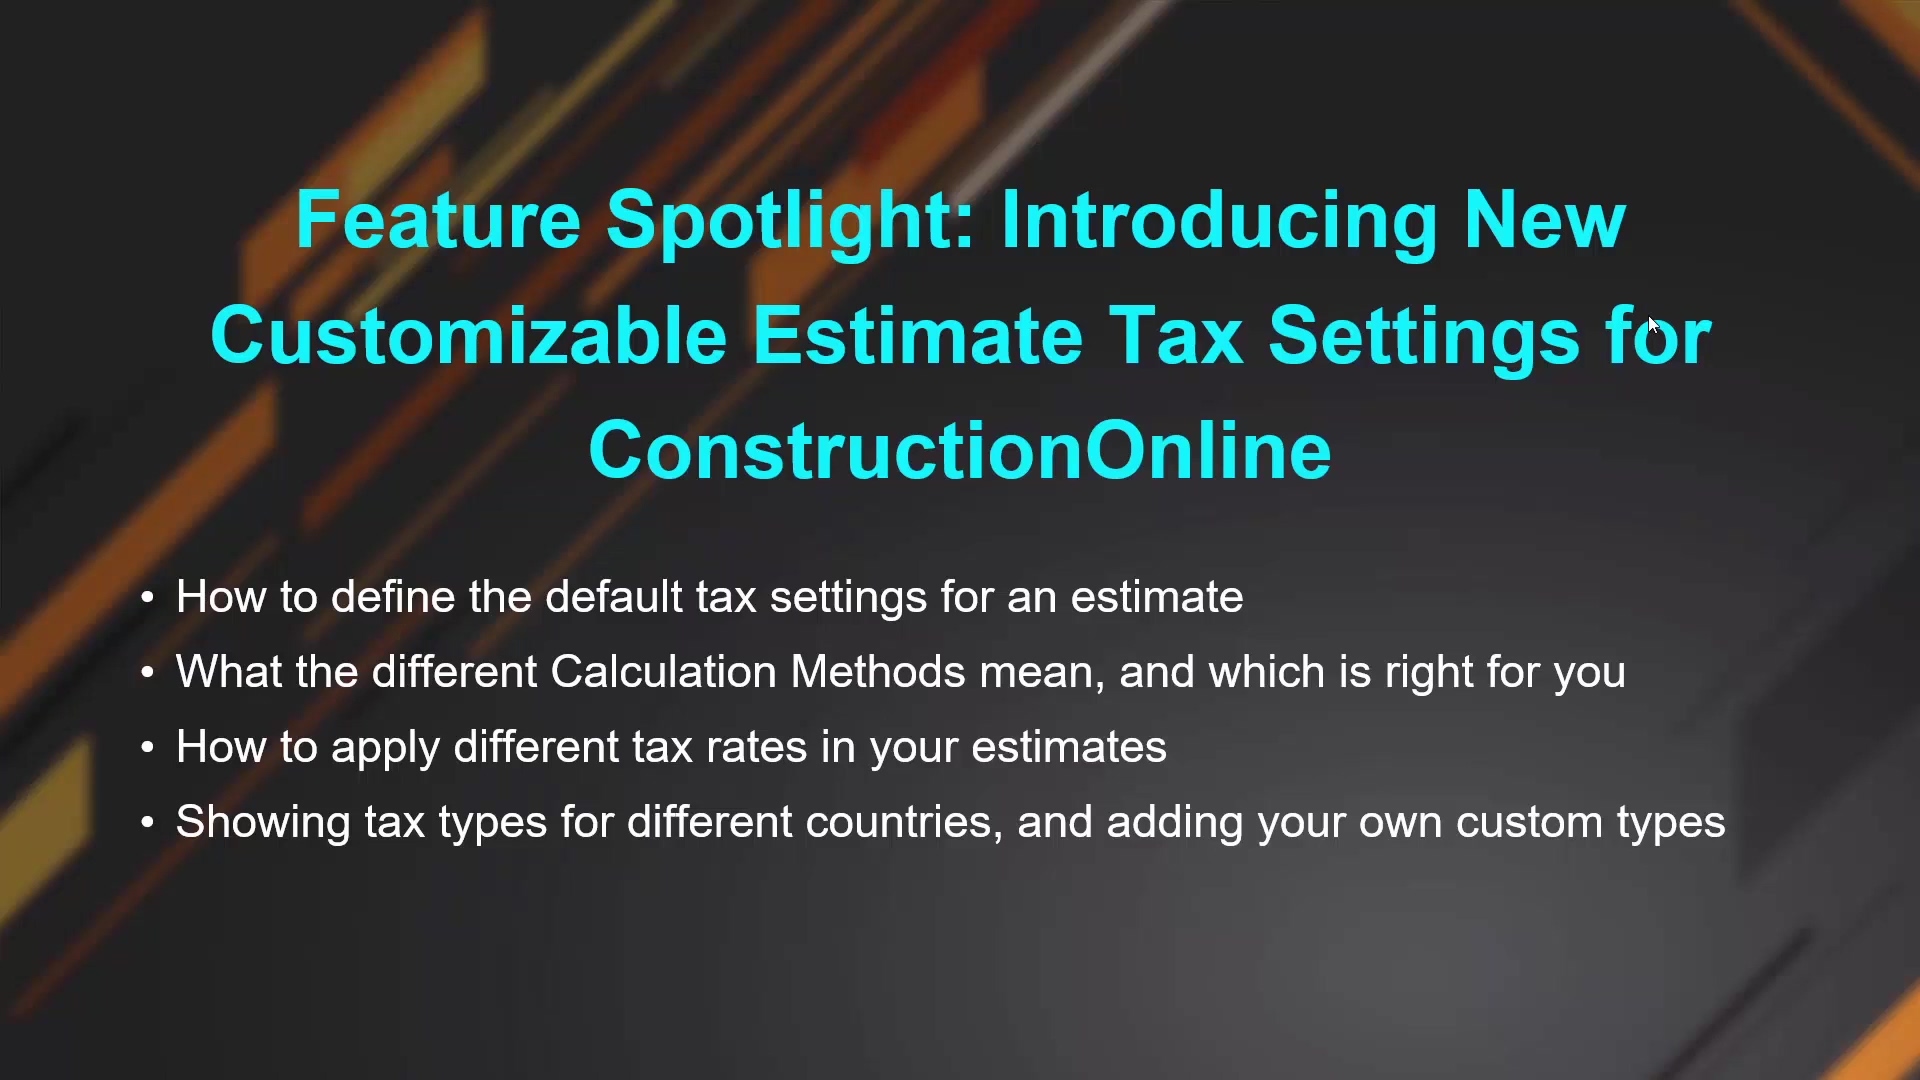 Feature Spotlight - Introducing New Customizable Estimate Tax Settings for ConstructionOnline